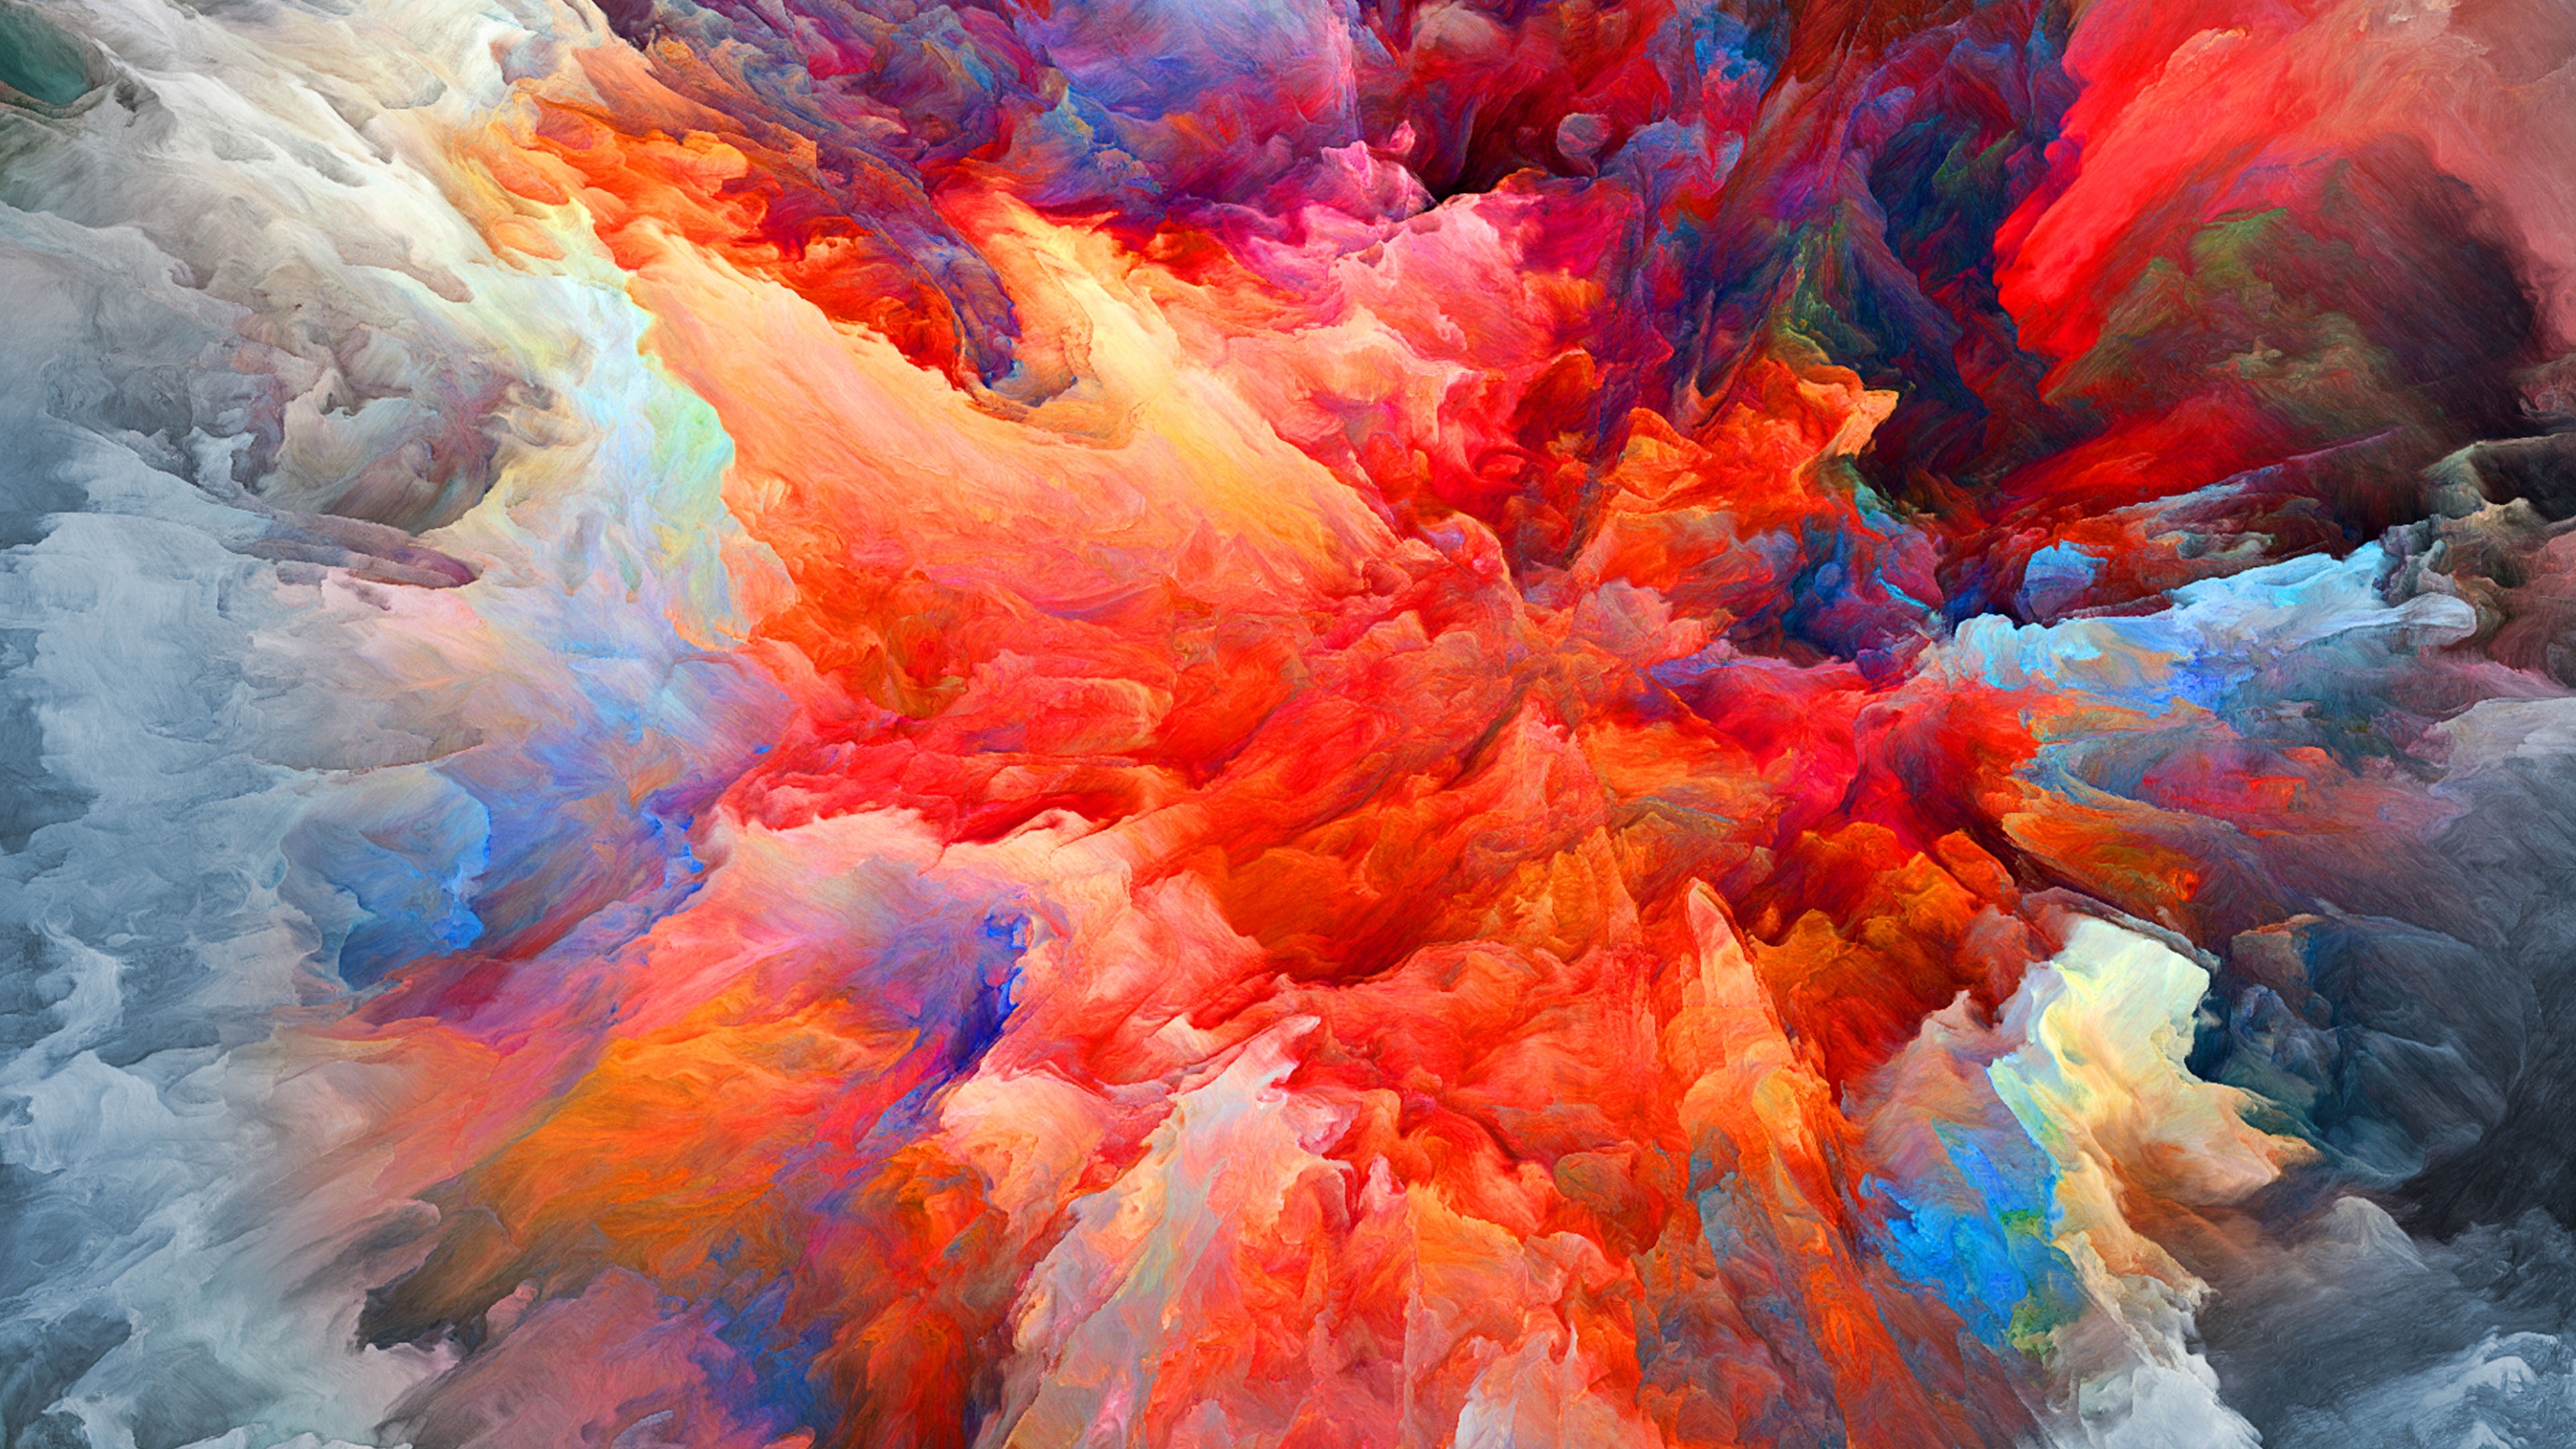 4K Colorful Blast of Smoke Wallpaper, HD Artist 4K Wallpapers, Images